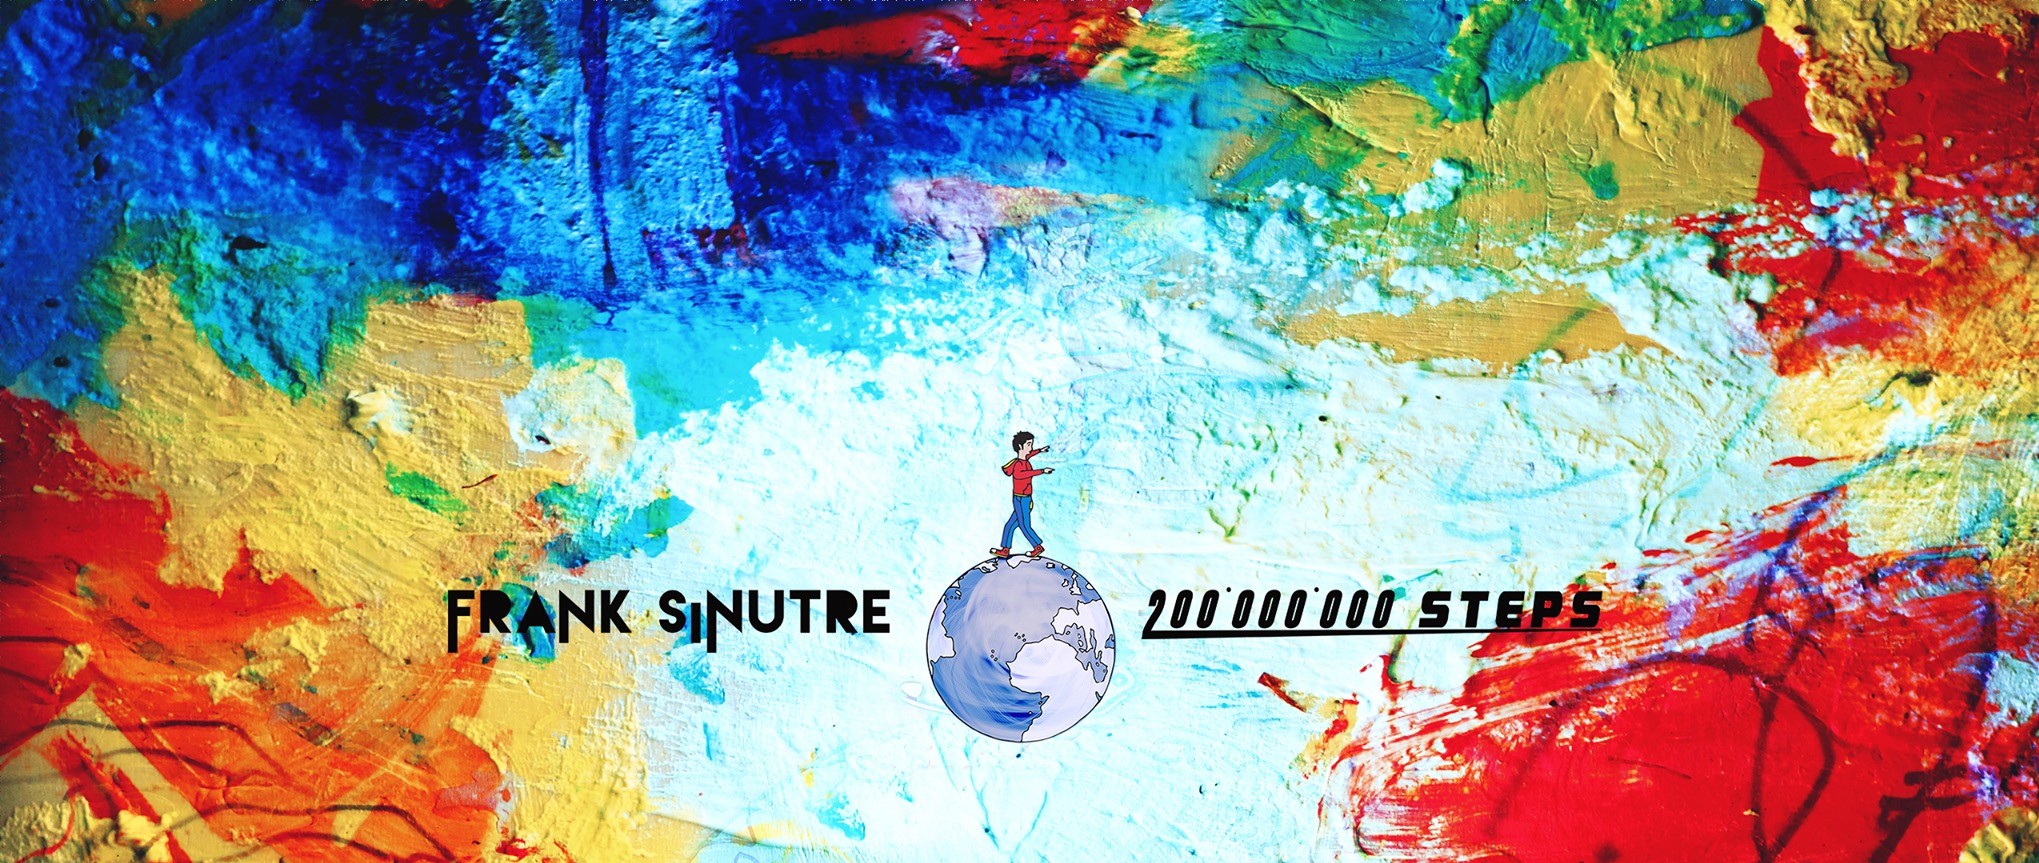 Frank Sinutre- Il duo geniale da 200.000.000 Steps